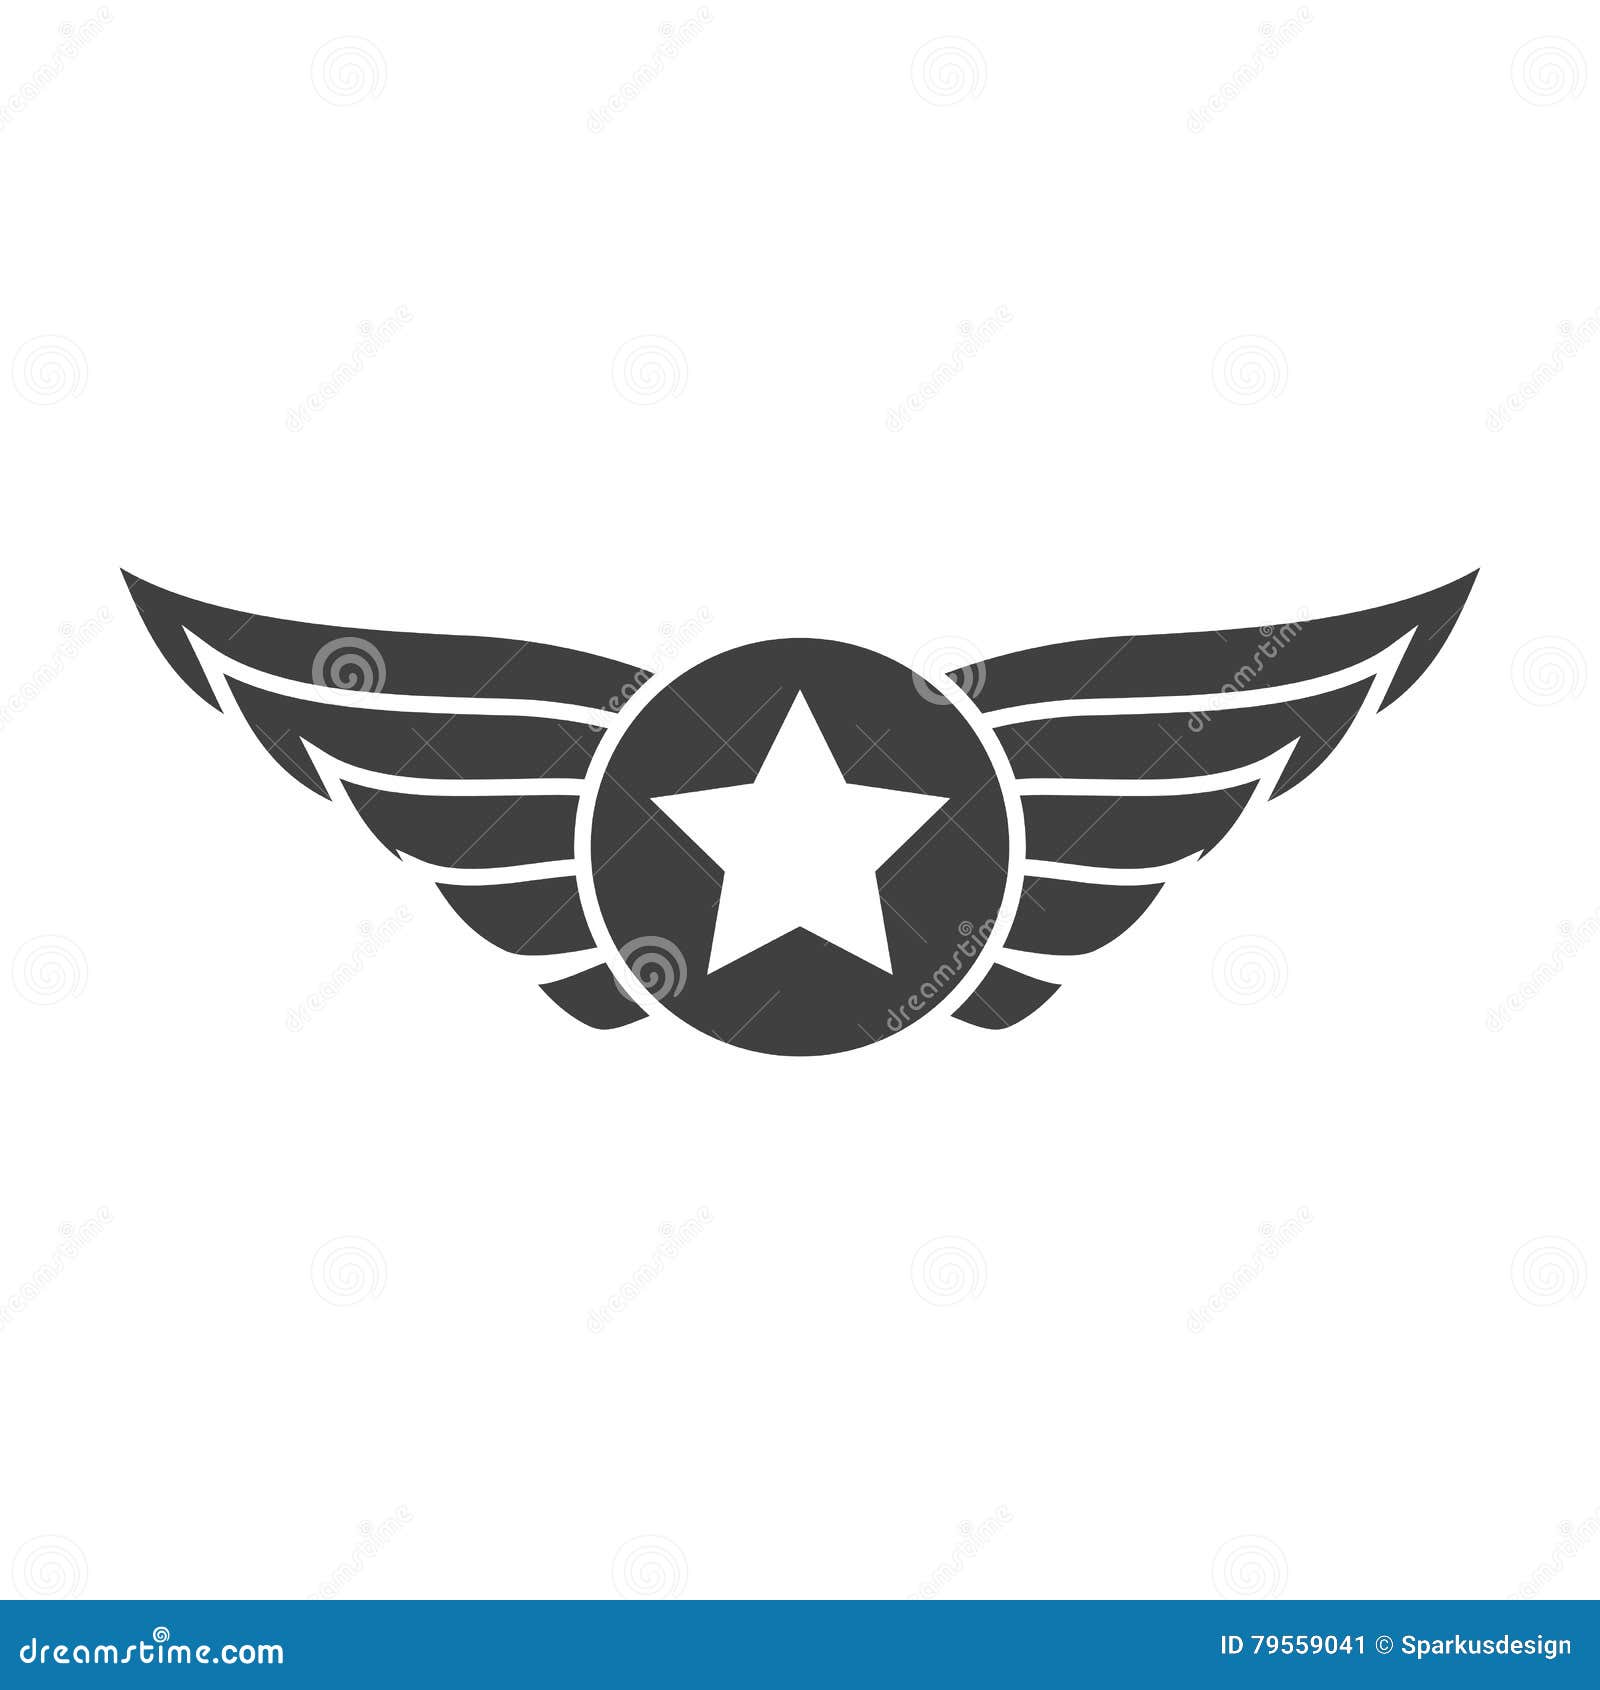 aviation gray emblem, badge or logo